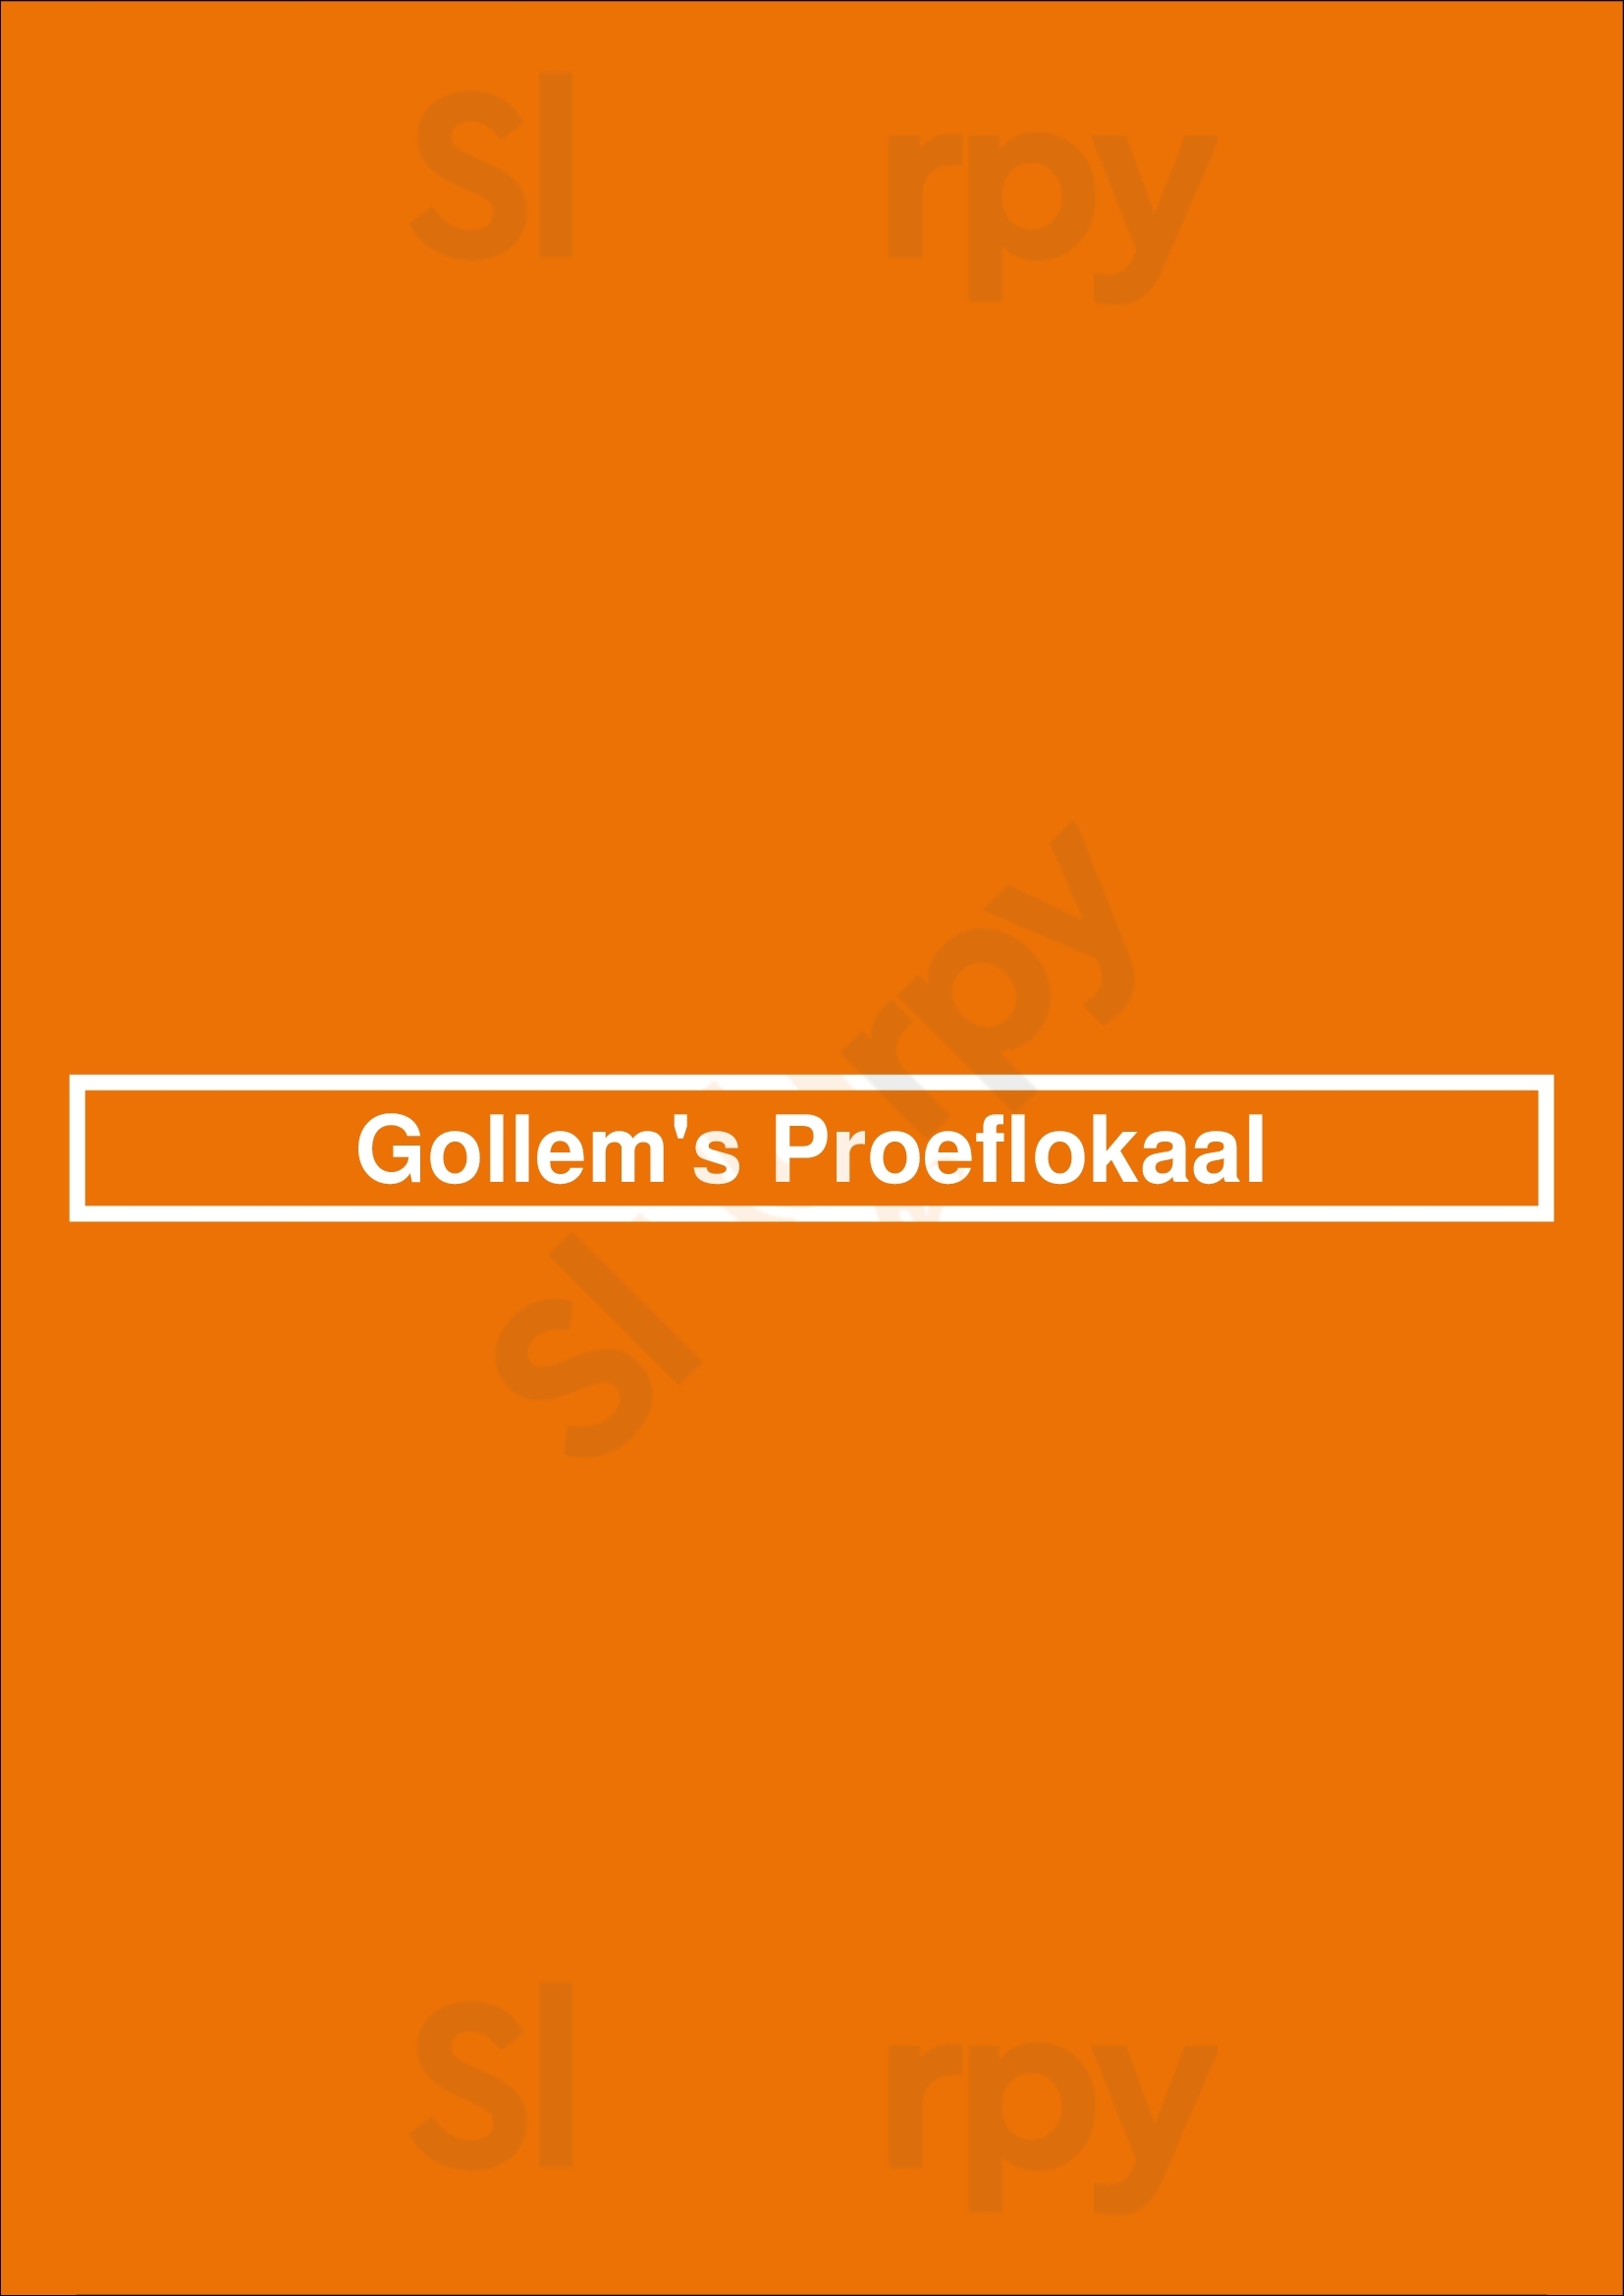 Gollem's Proeflokaal Amsterdam Menu - 1